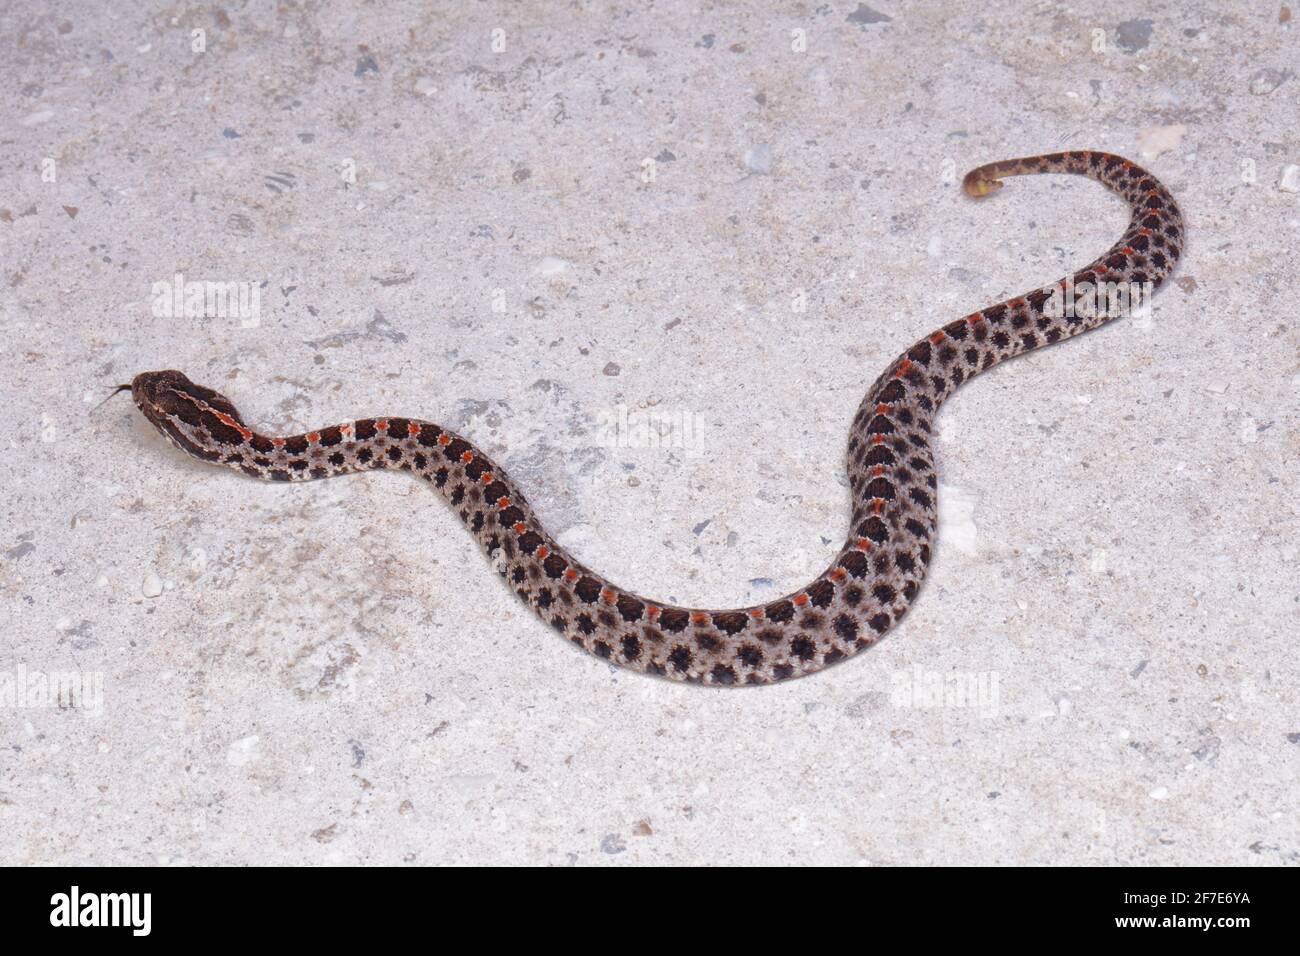 A Dusky pigmy rattlesnake, Sistrurus miliarius barbouri, on a sandy road. Stock Photo